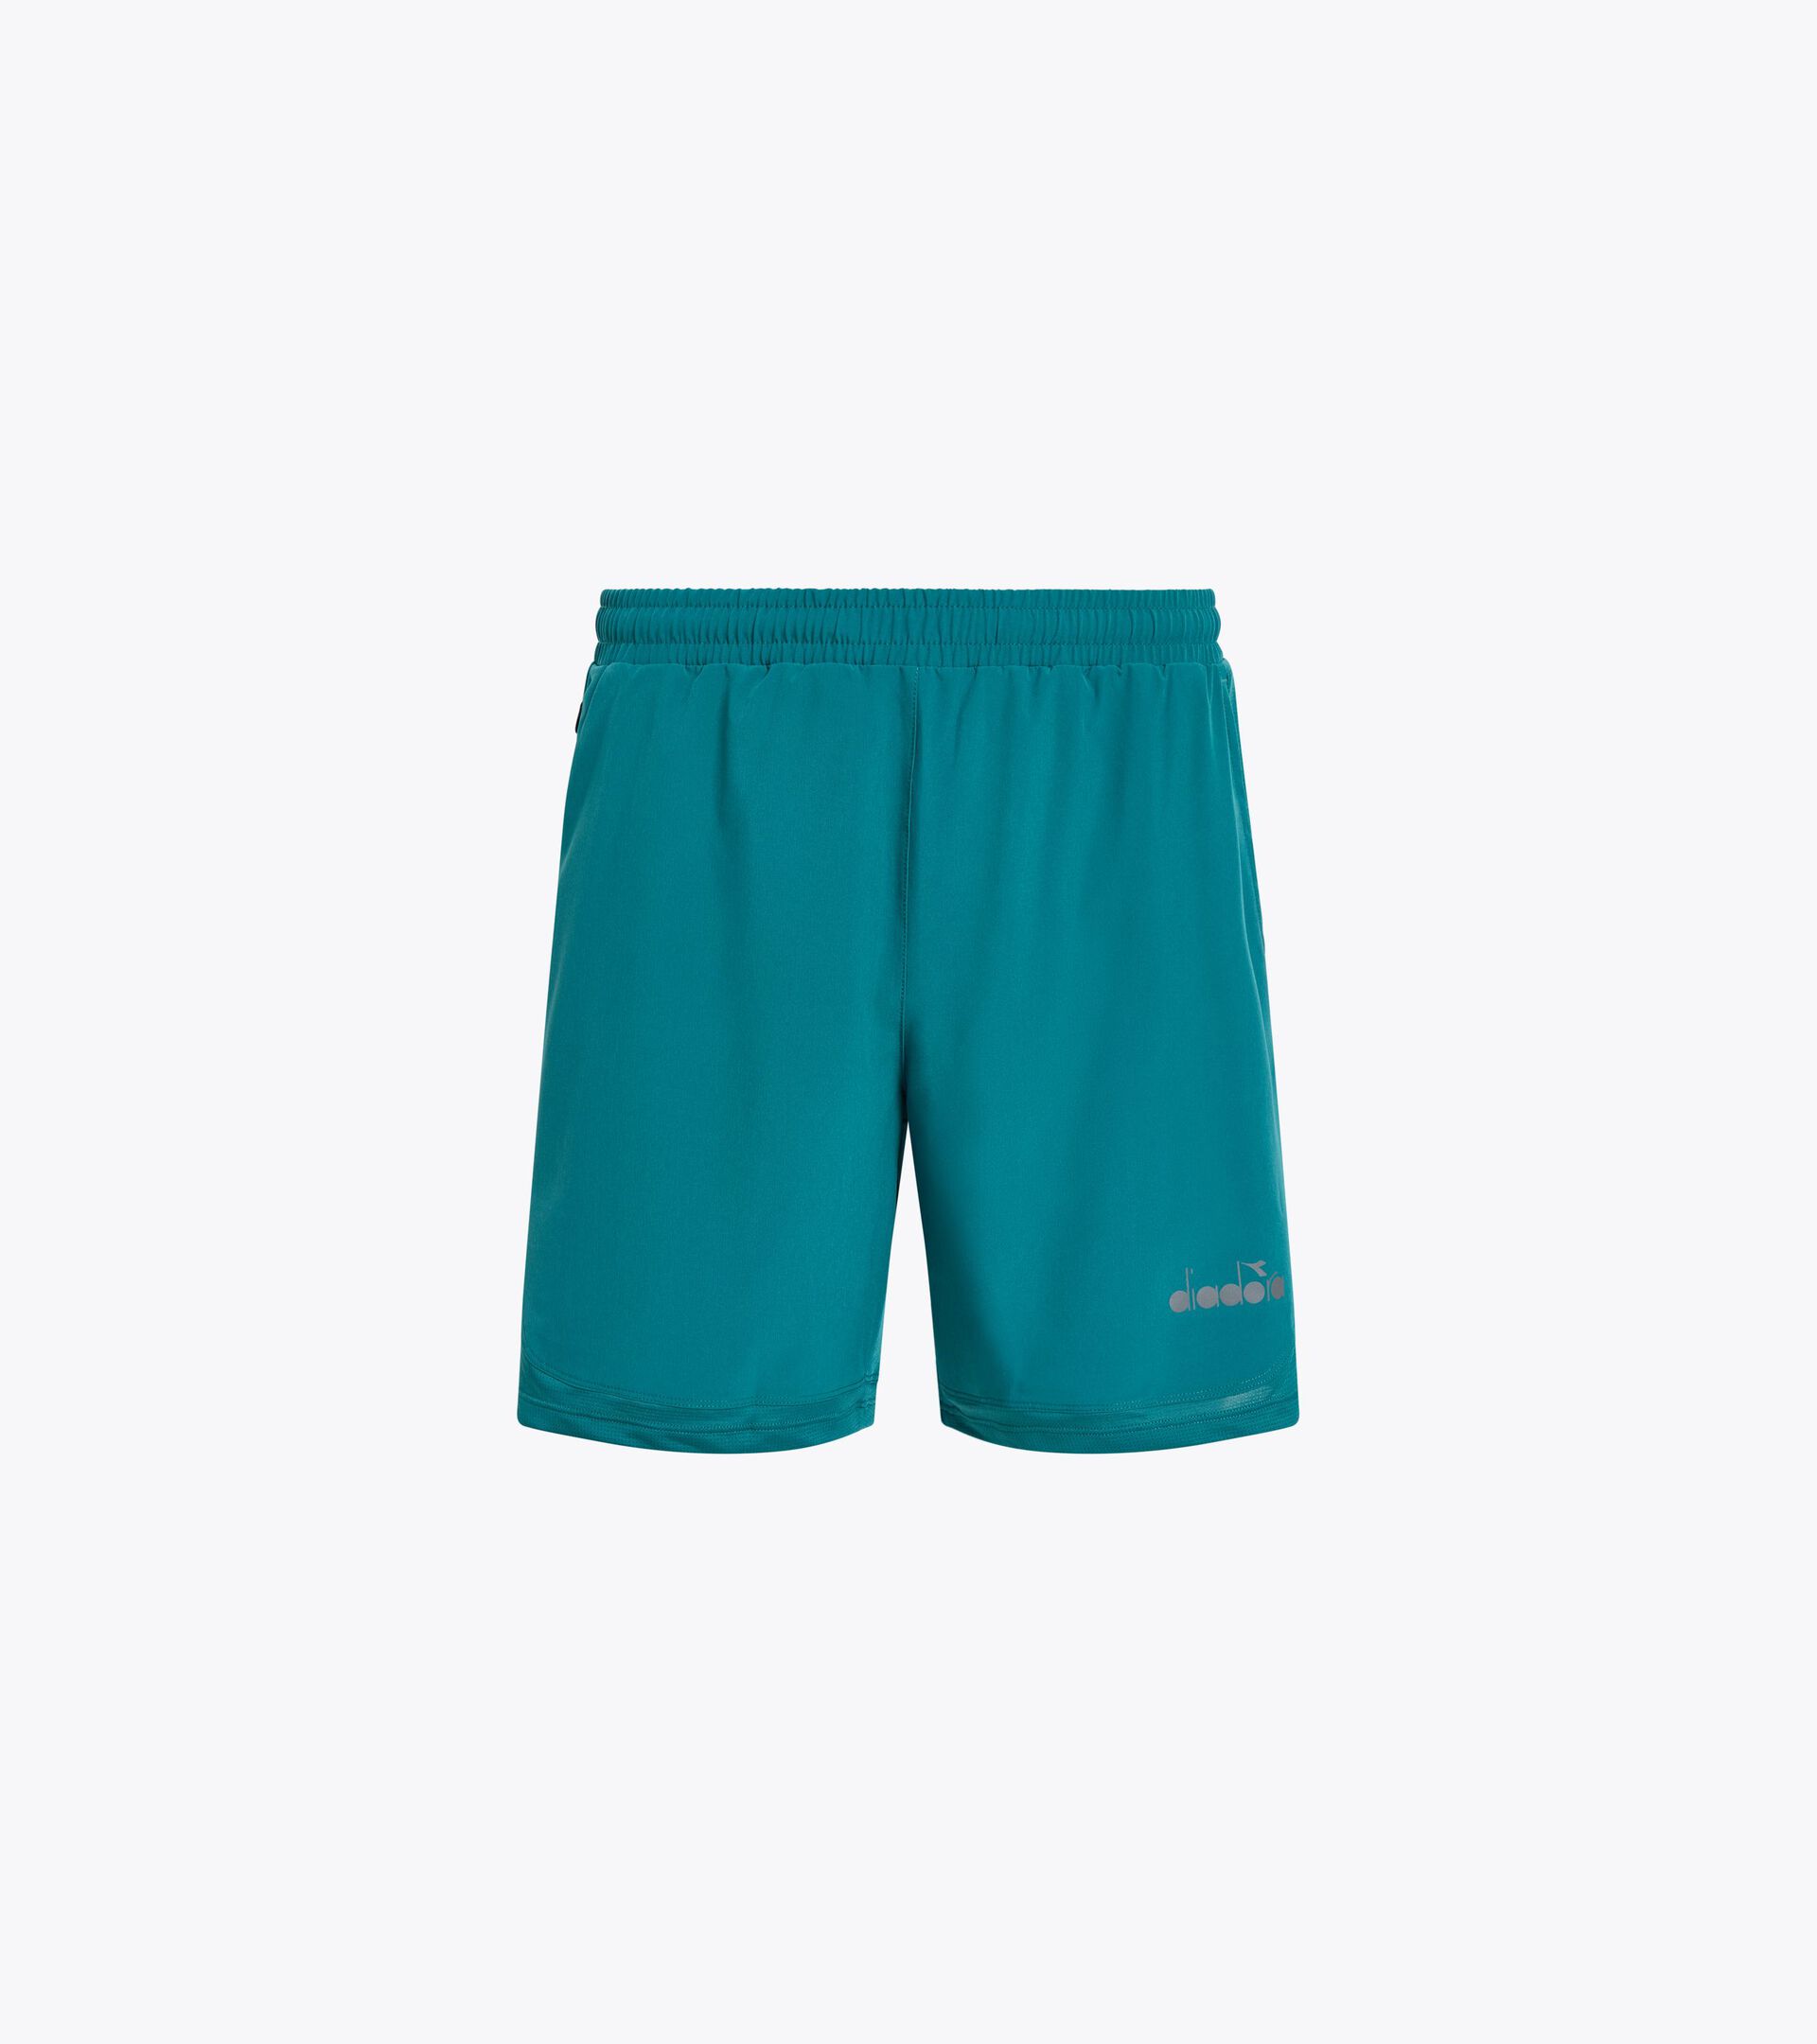 7’’ running shorts - Light fabric - Men’s SHORTS RUN 7'' COLONIAL BLUE - Diadora